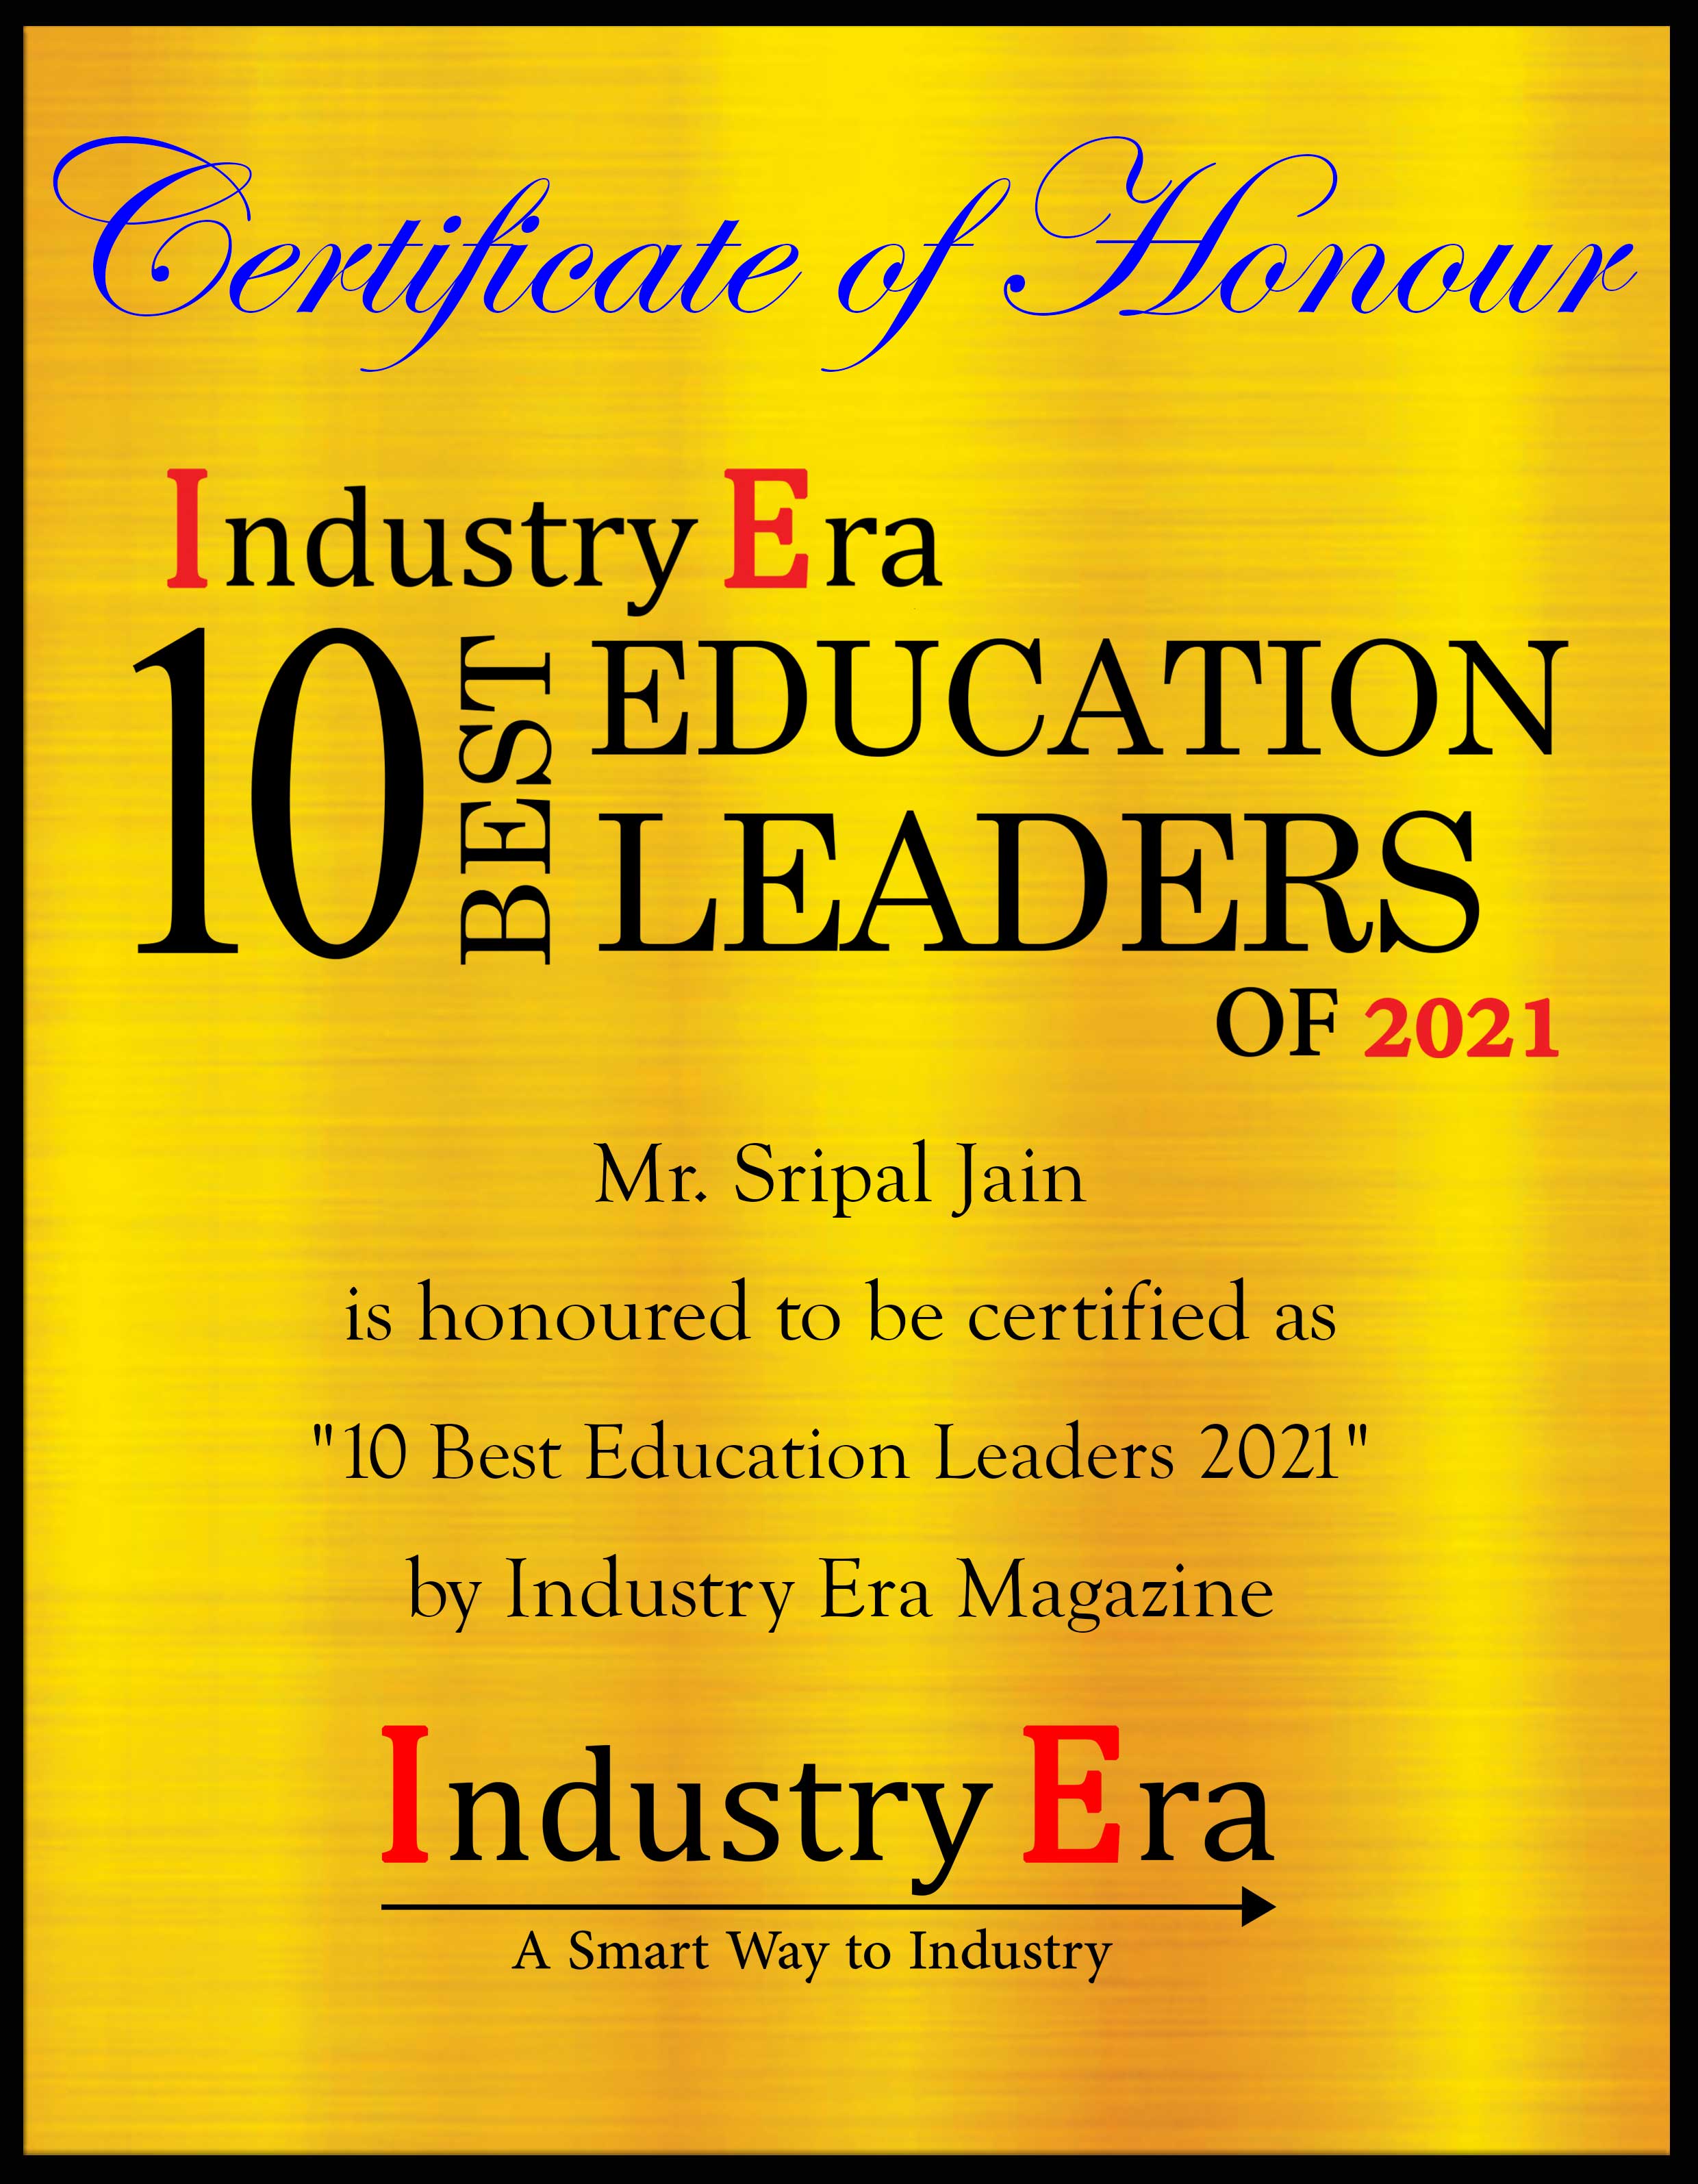 Mr. Sripal Jain, Co-founder of Simandhar Education Certificate